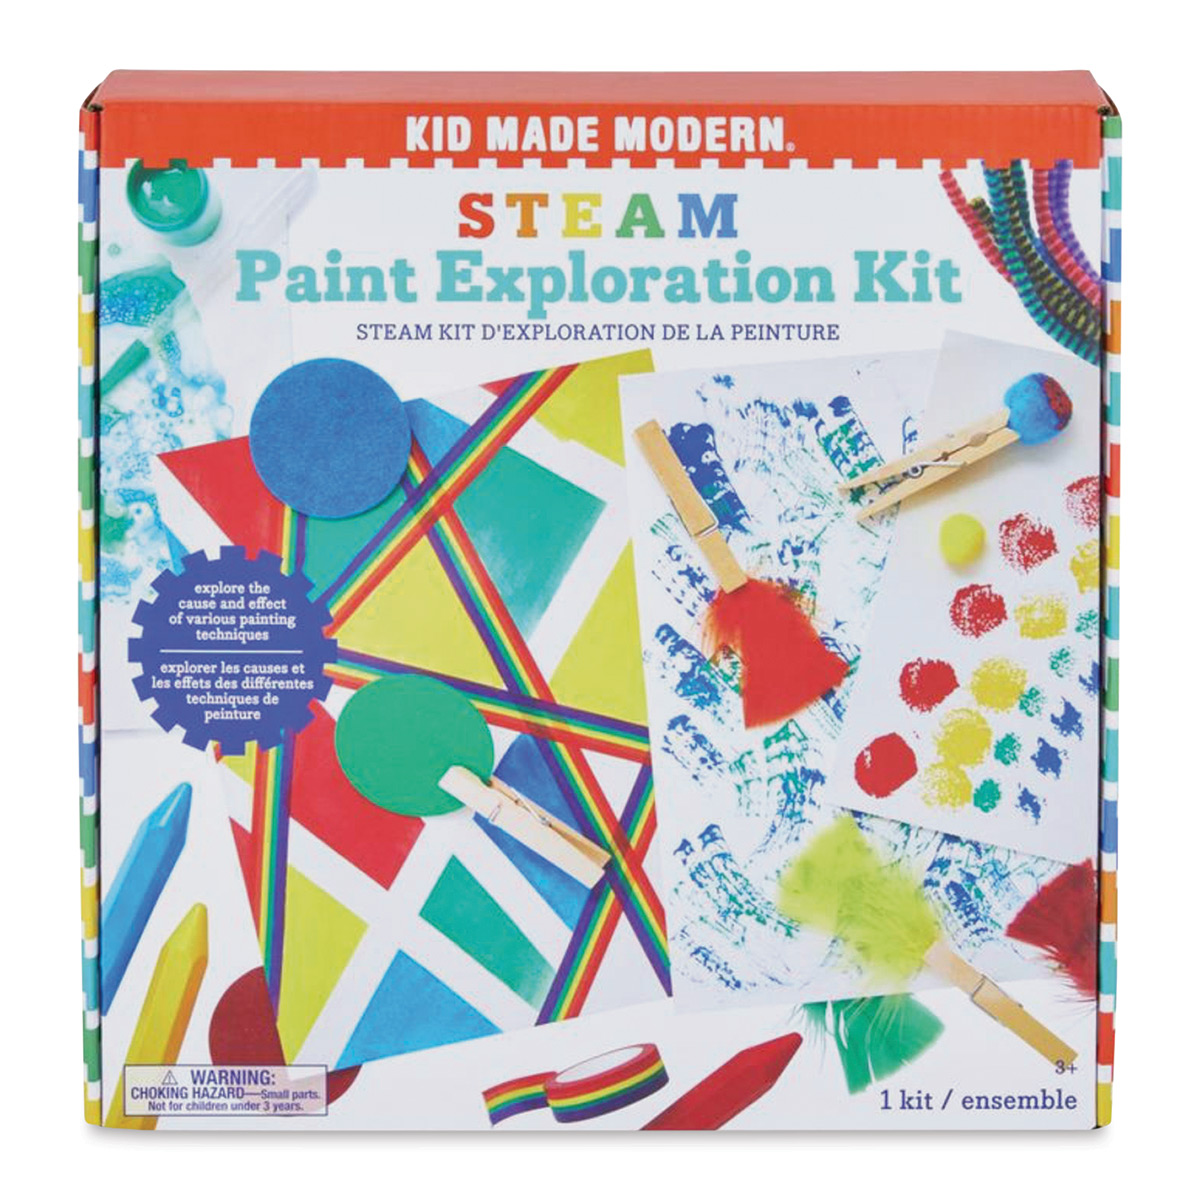 Kid Made Modern Artist Studio Kit